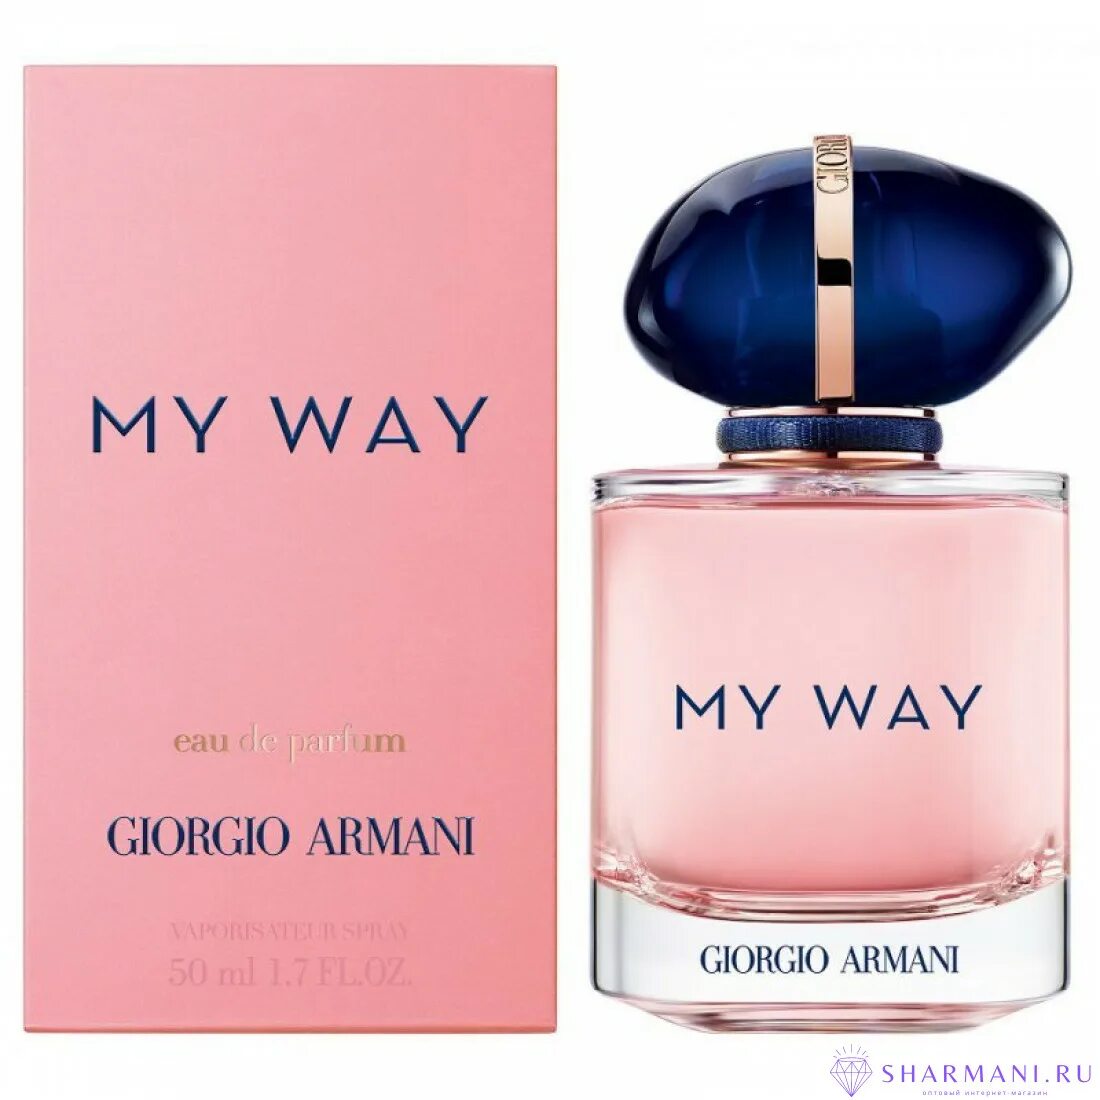 Giorgio Armani my way EDP 90ml. My way Giorgio Armani 90 ml. Giorgio Armani my way Parfum, 90 ml. Armani my way 90 мл parfume. Туалетная вода май